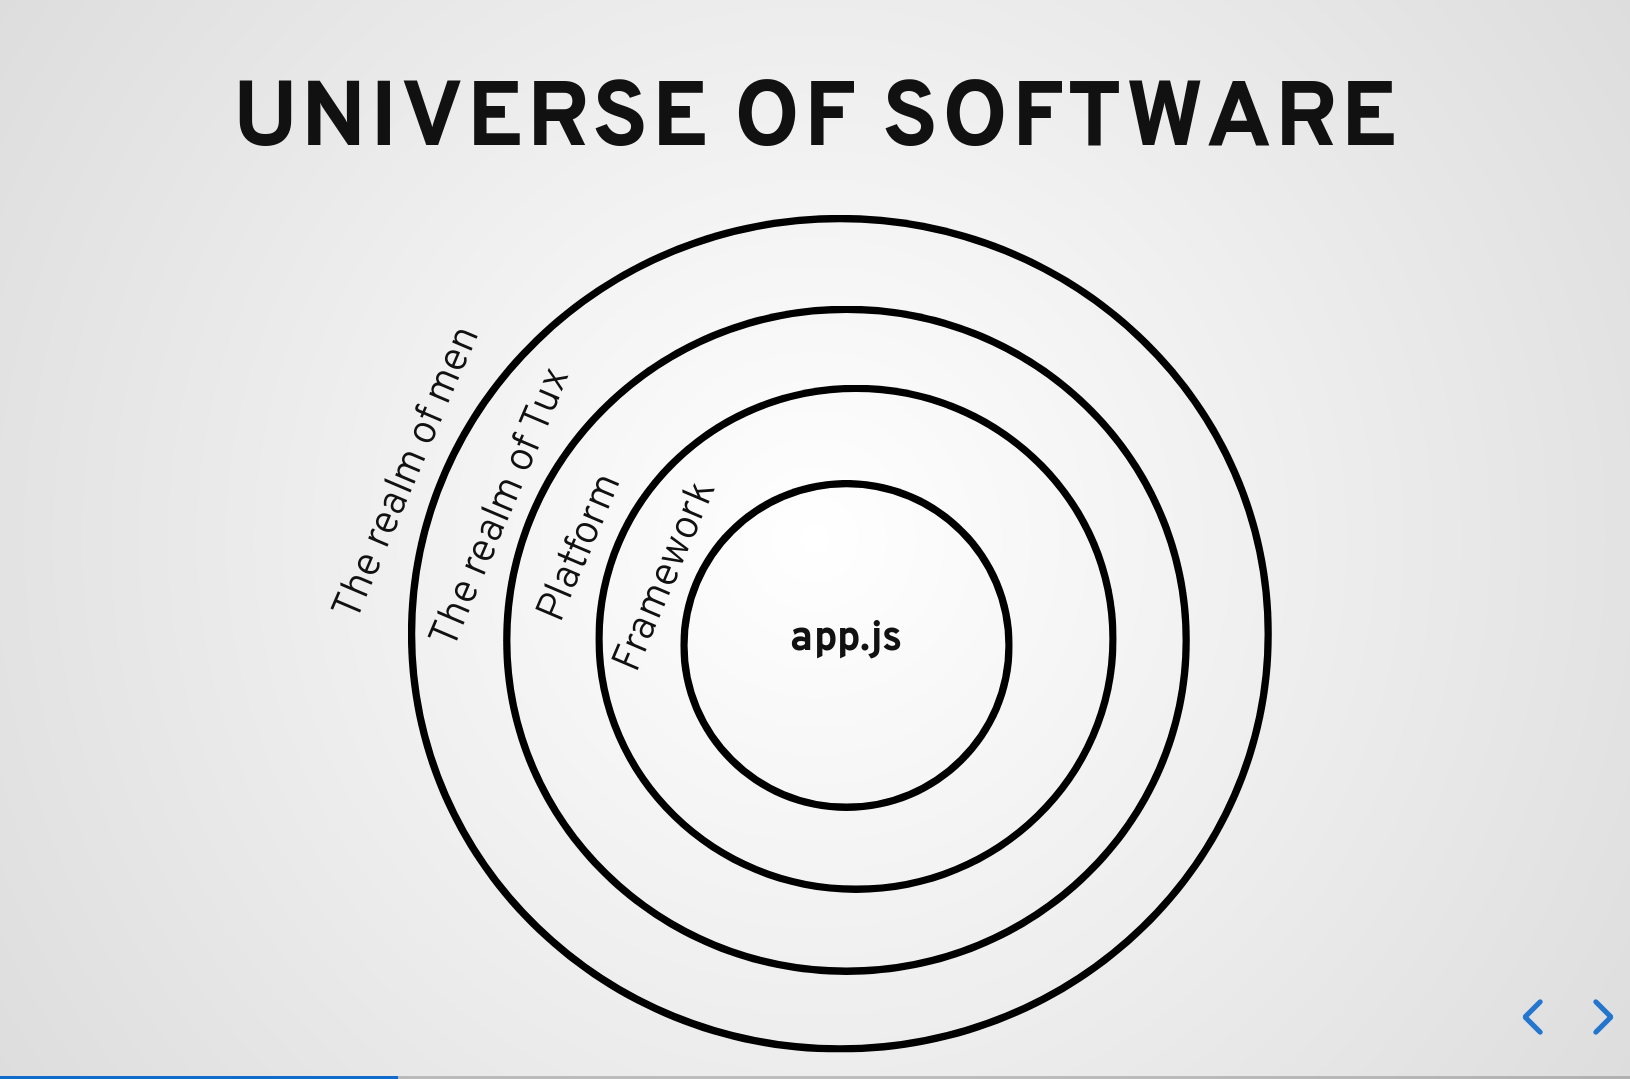 Many layered of software universe